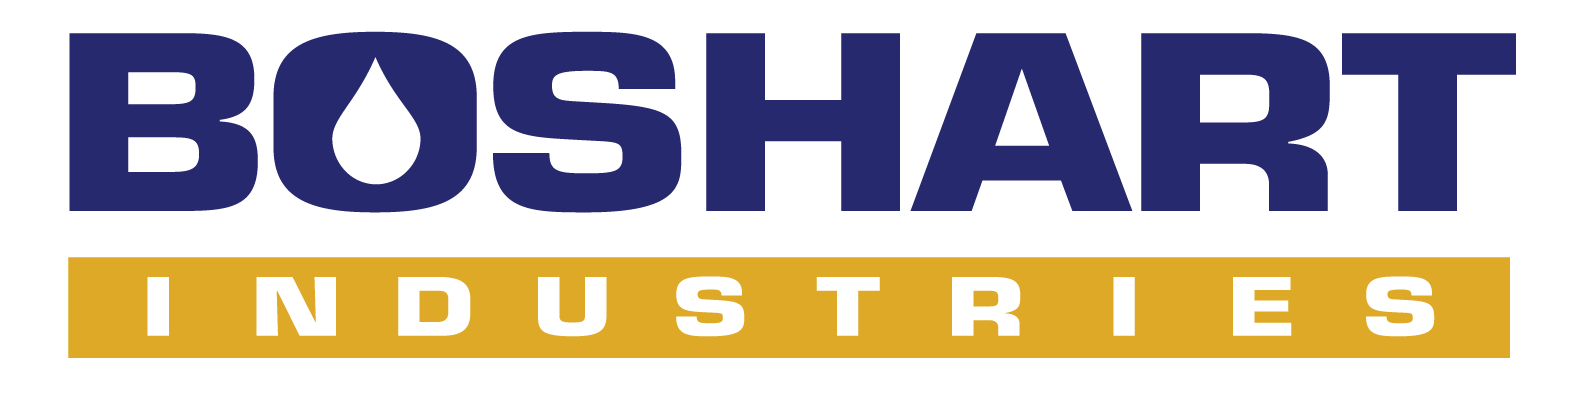 Boshart industries logo